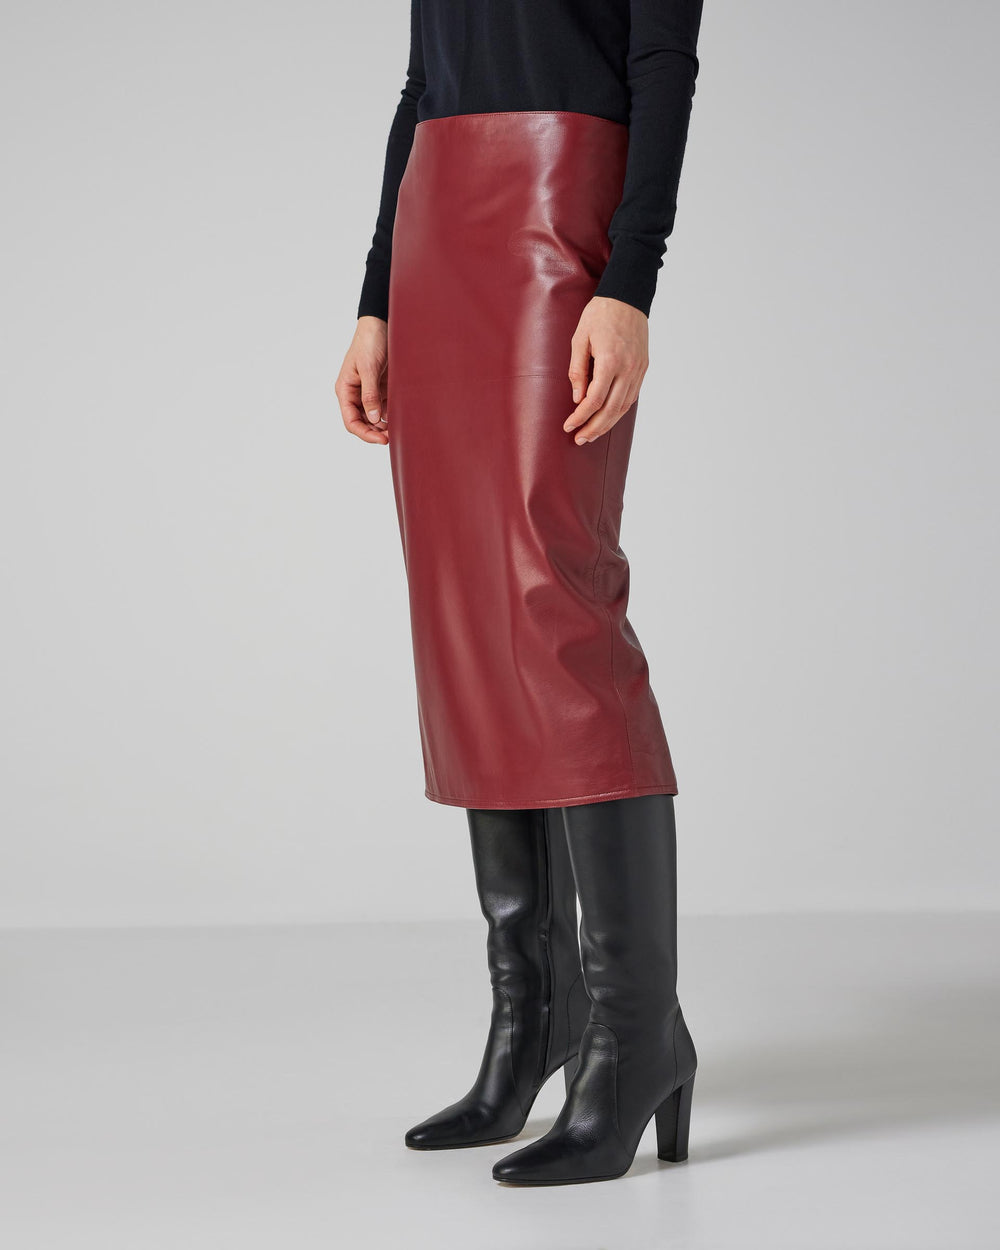 Nova Skirt in Nappa Leather, Burgundy